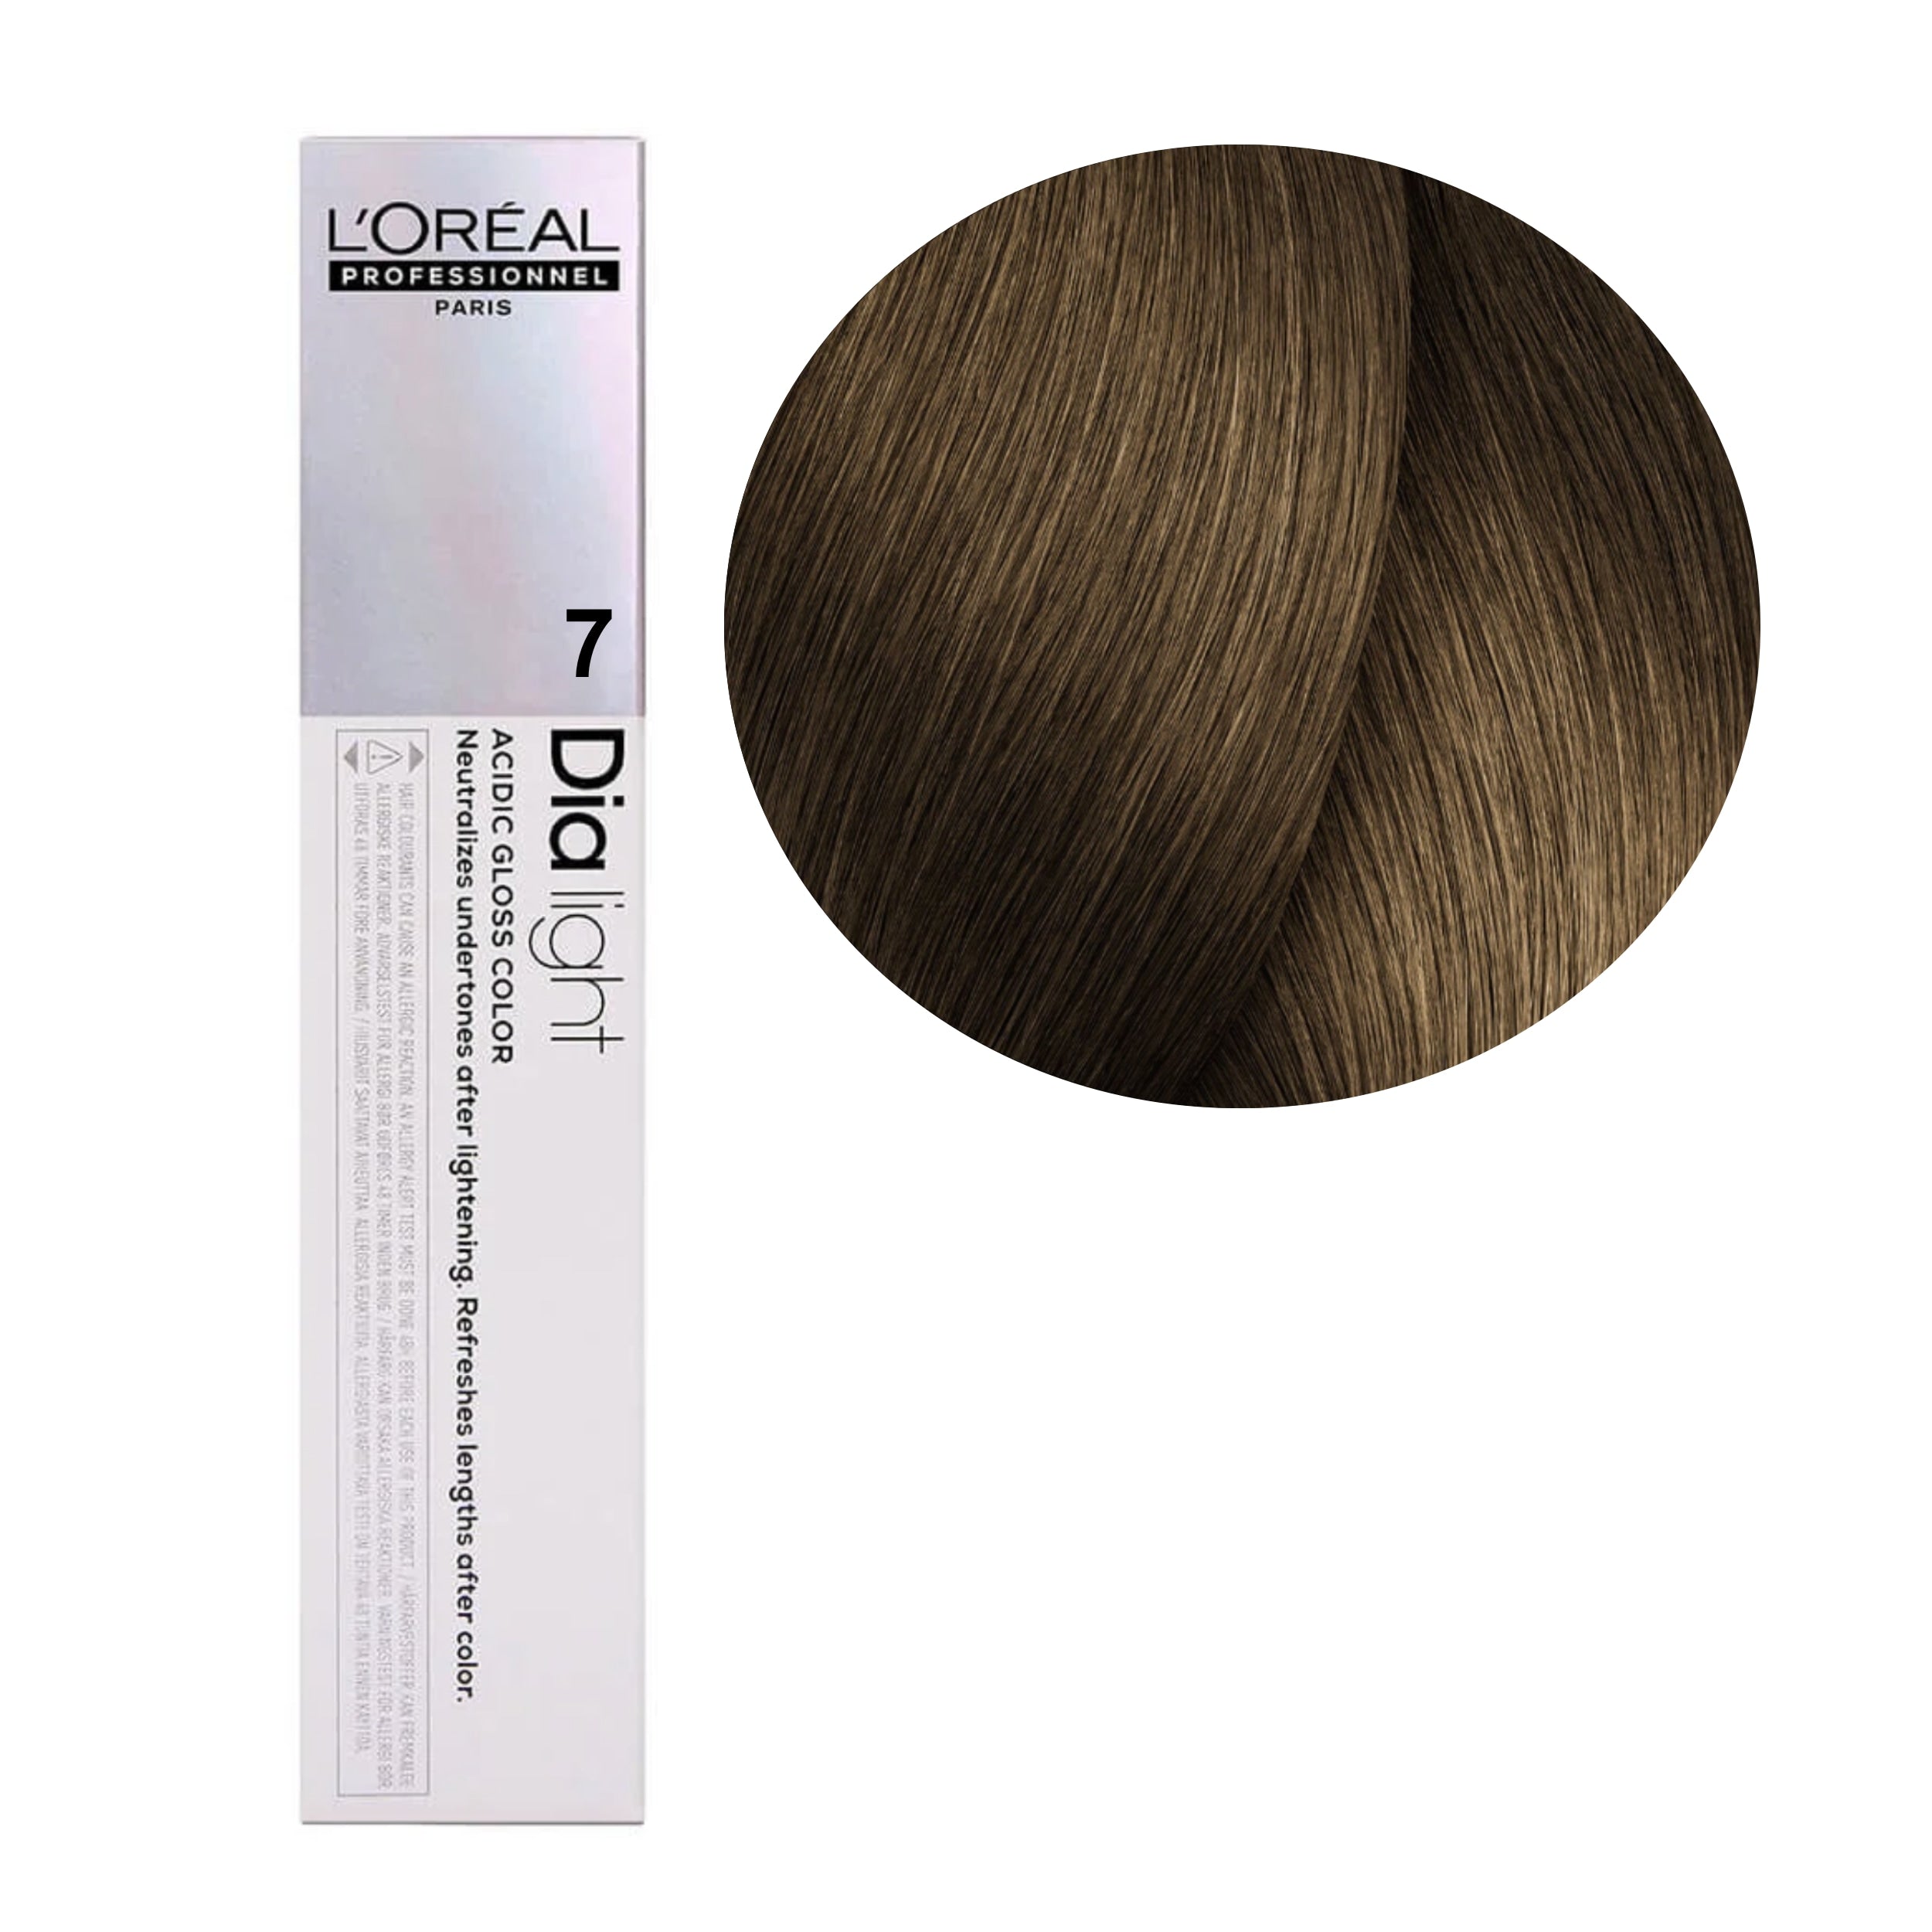 lorel hair color 7 light brown